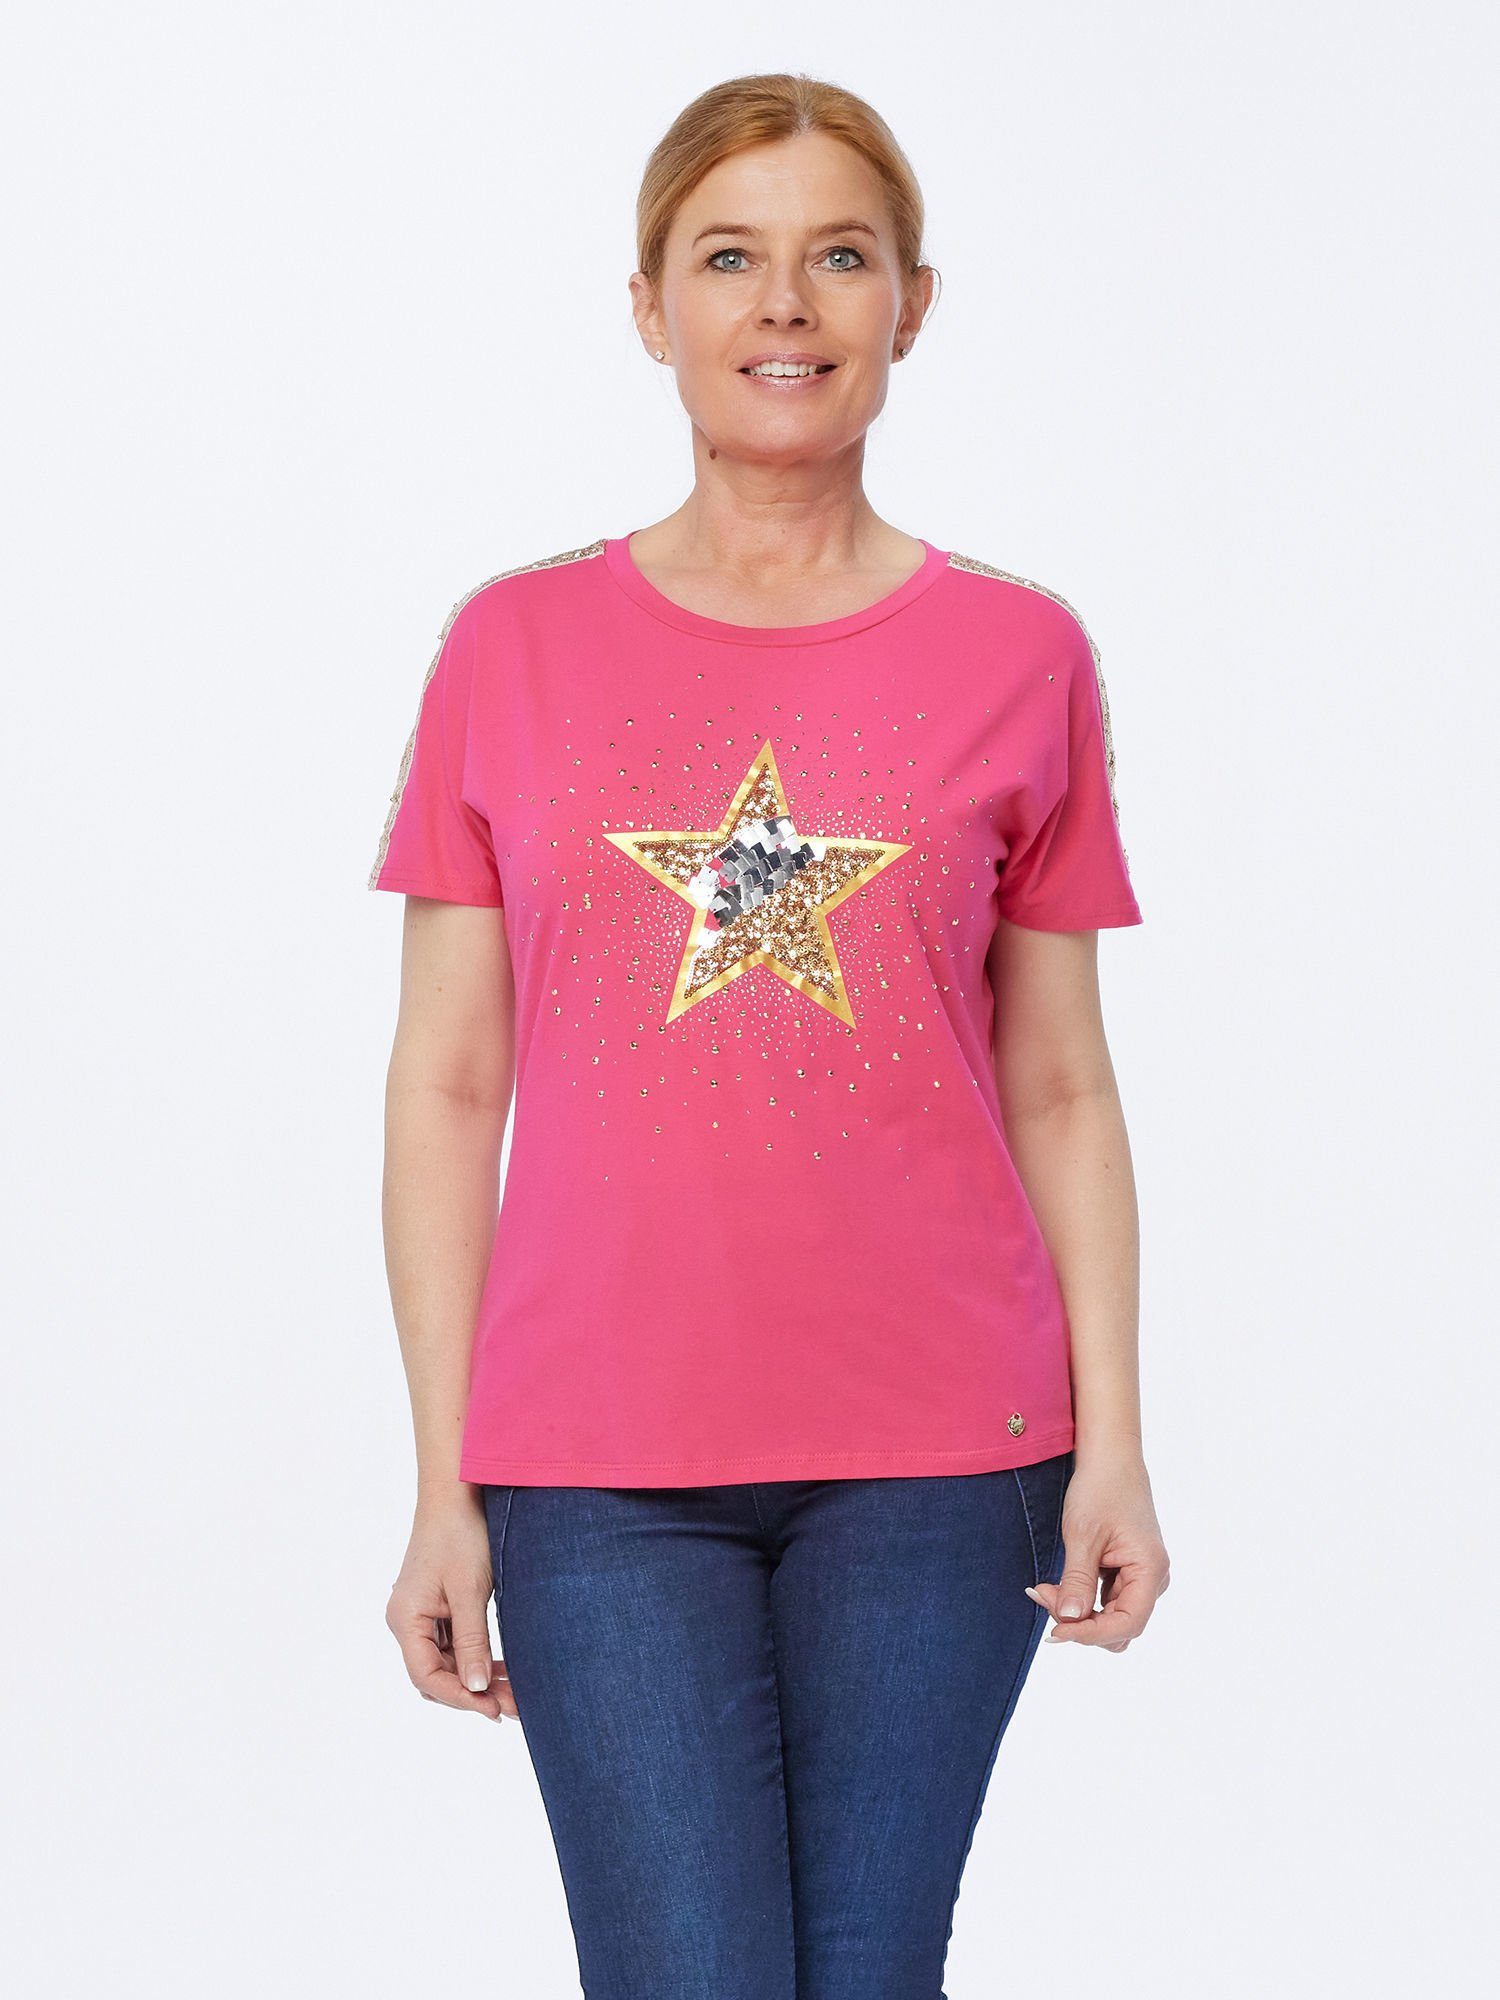 Christian Materne T-Shirt Kurzarmbluse mit Stern-Motiv pink